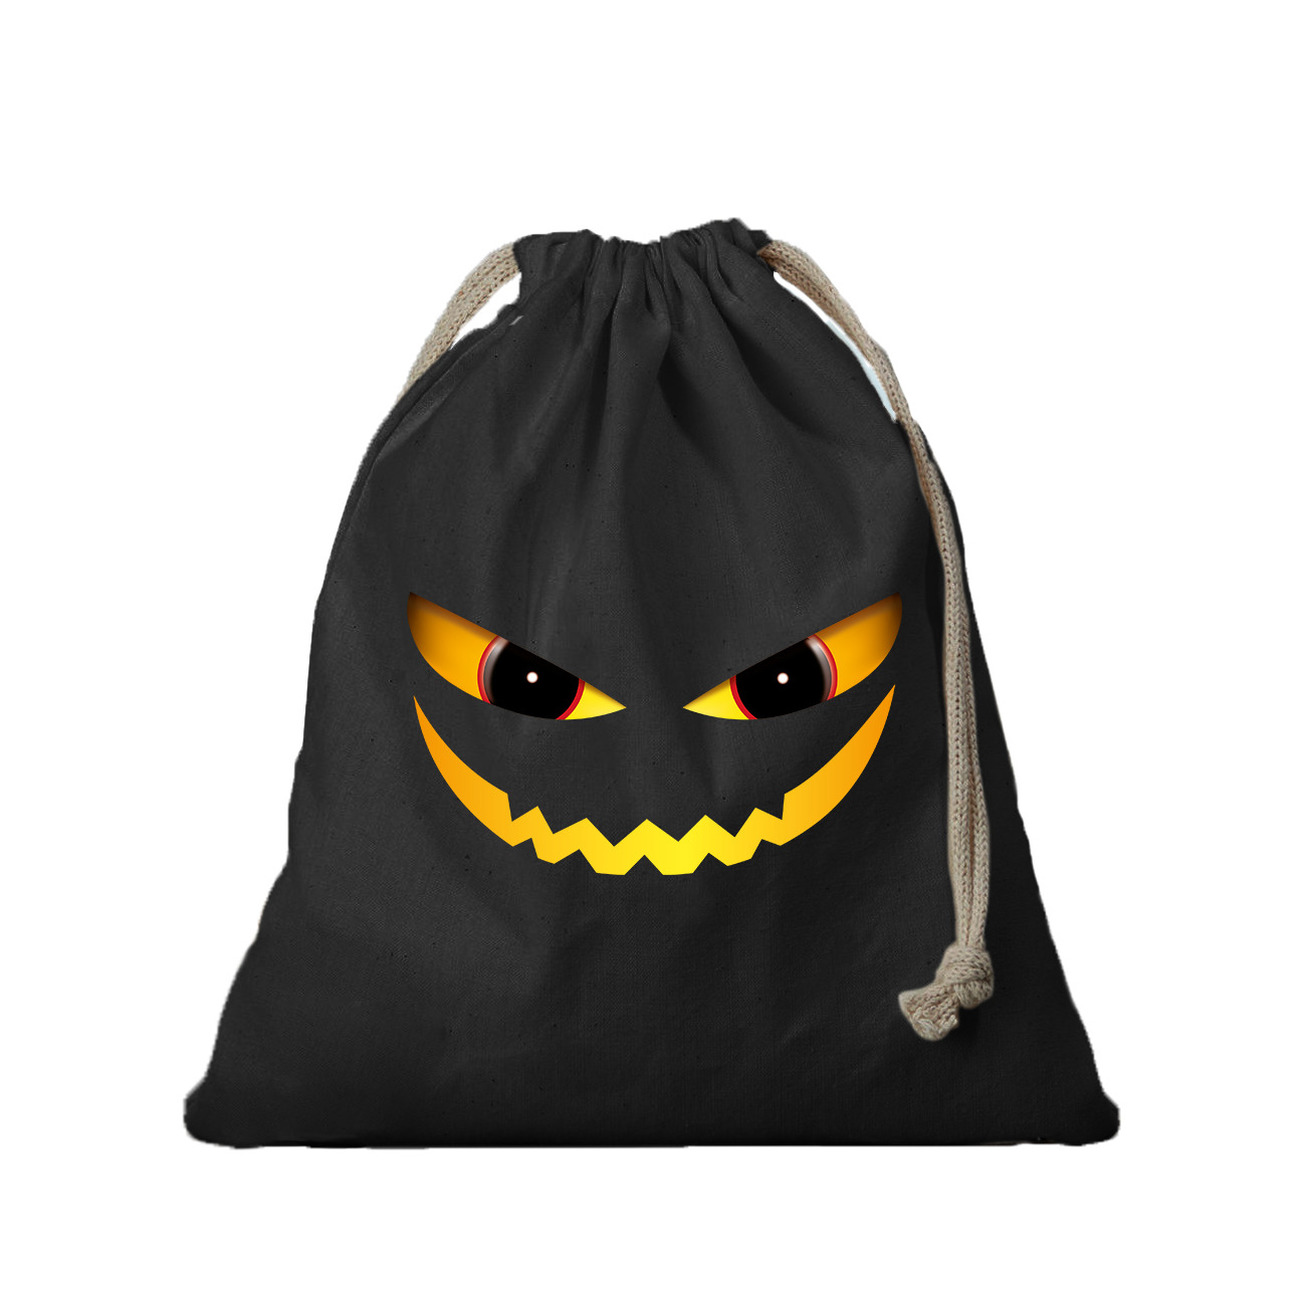 Halloween - 6x Duivel gezicht halloween canvas snoep tasje/ snoepzakje zwart met koord 25 x 30 cm